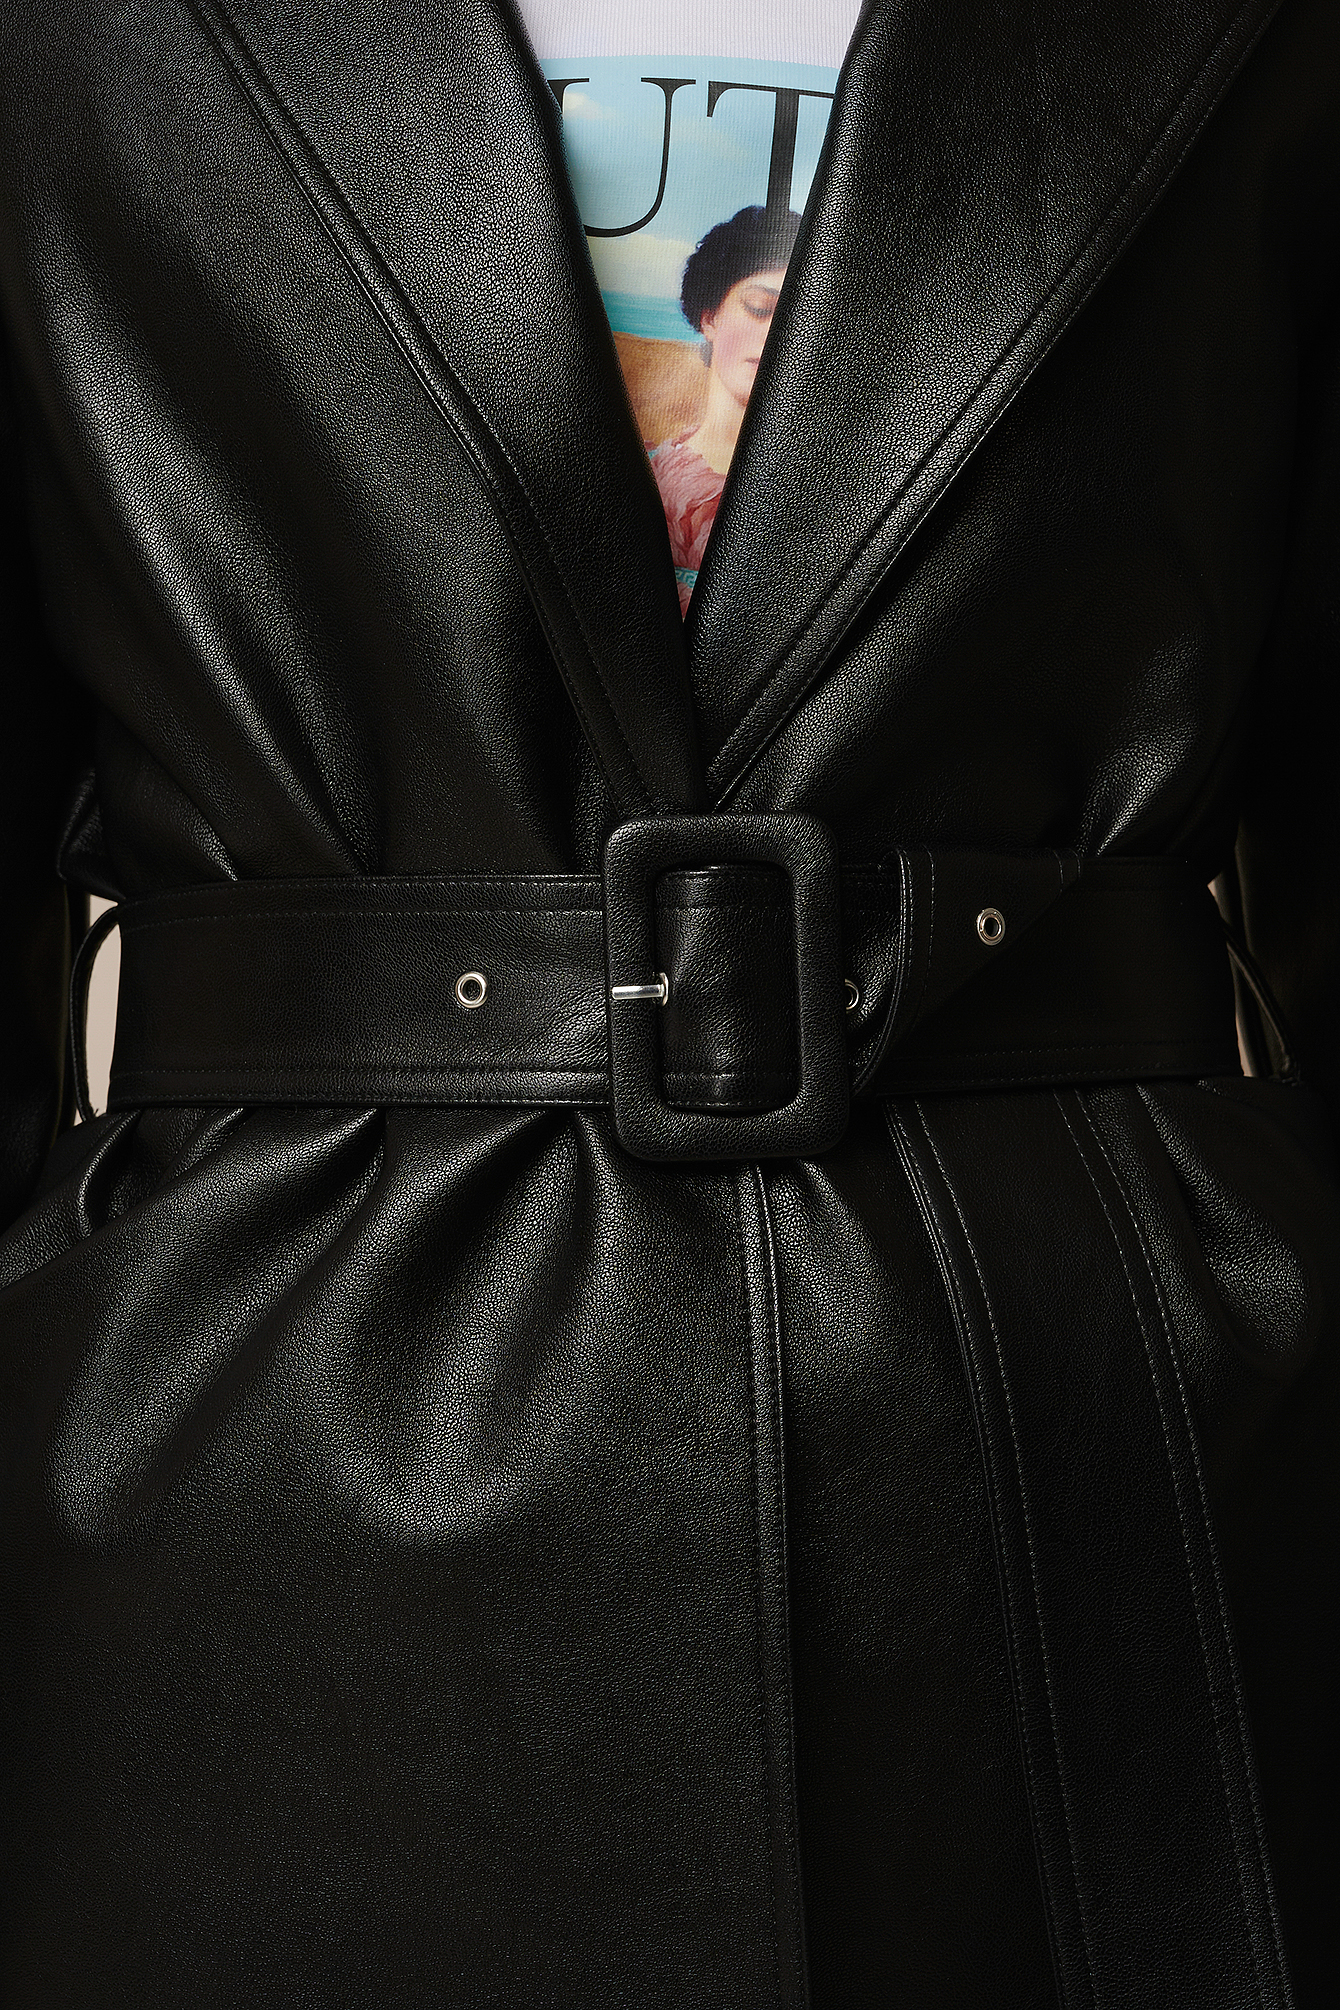 Black Faux Leather Oversized Blazer